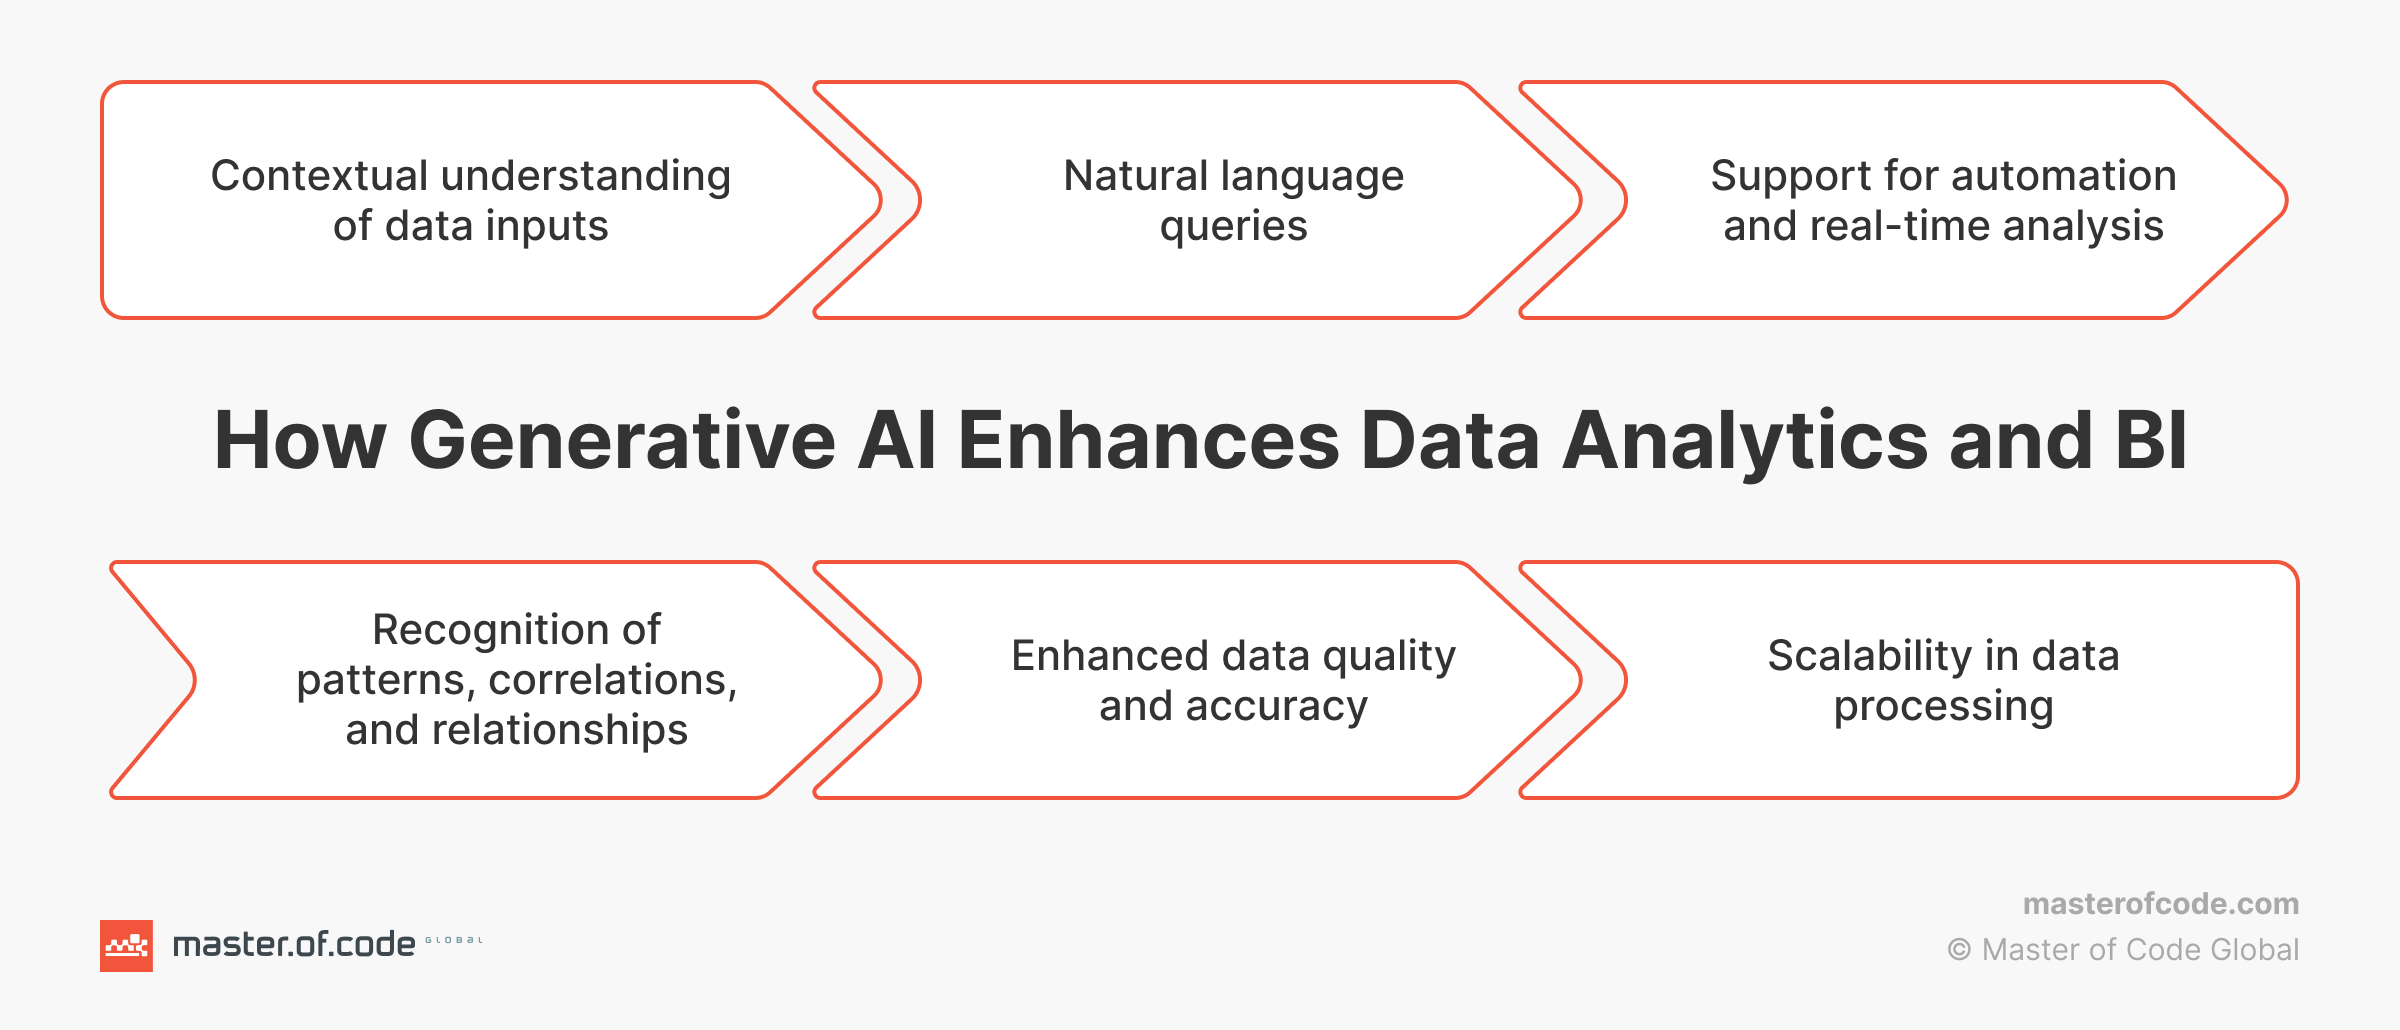 6 Benefits of Gen AI for Data Analytics and BI